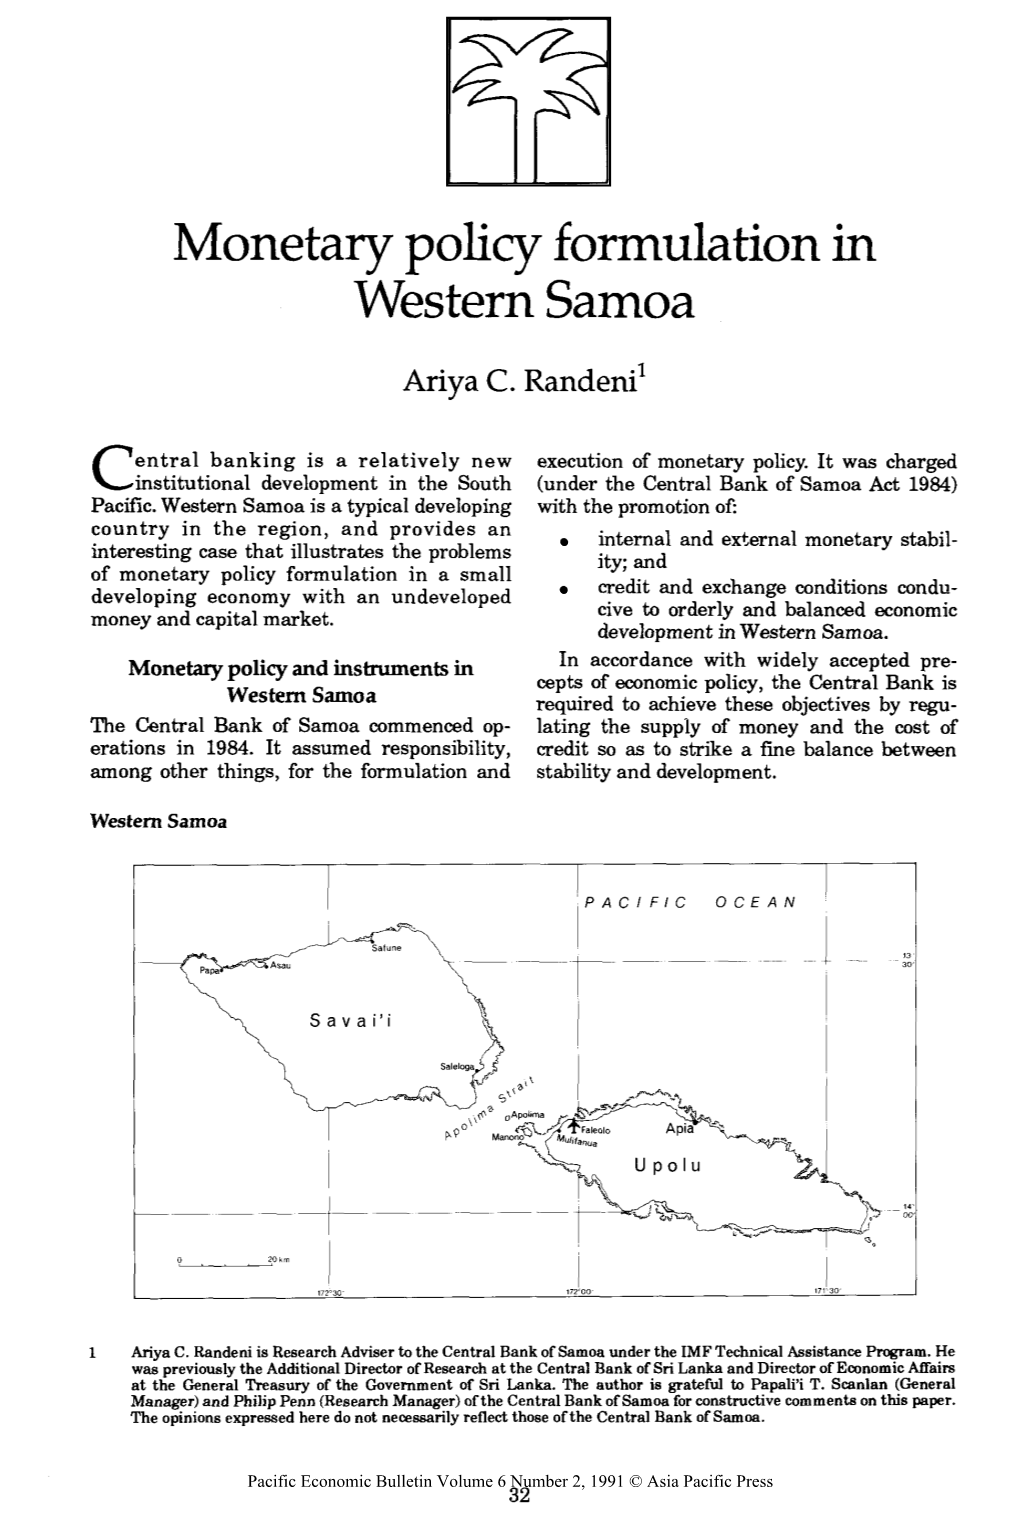 Monetary Policy Formulation in Western Samoa